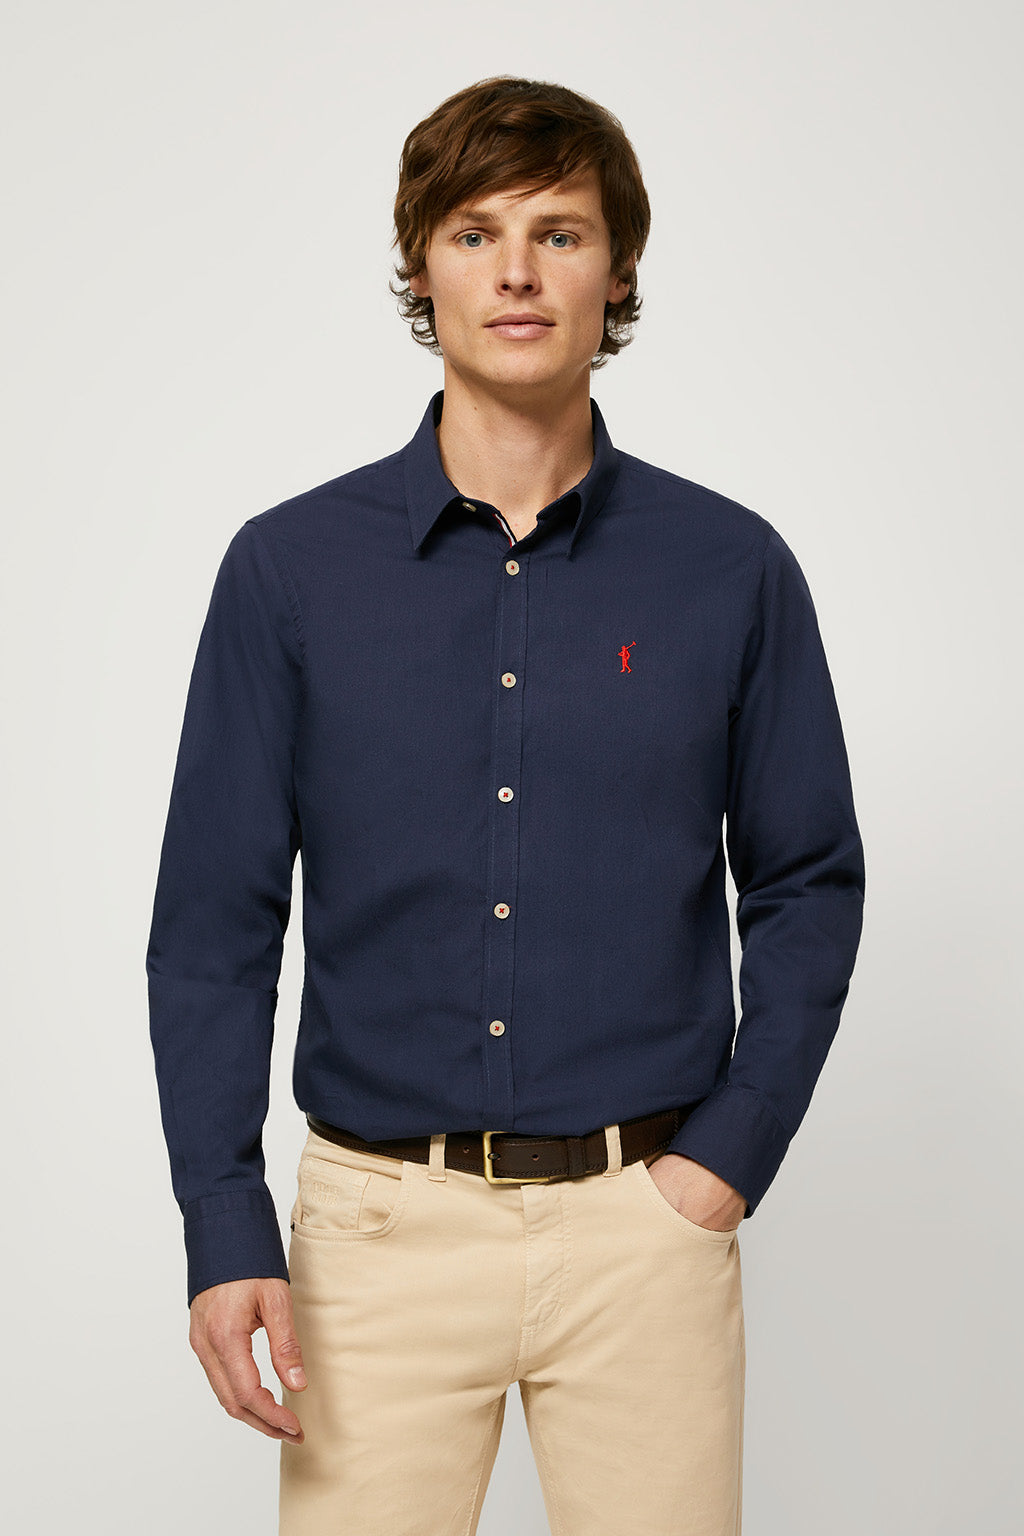 yo lavo mi ropa Saludar Instituto Camisa slim fit azul marino con logo bordado – Polo Club